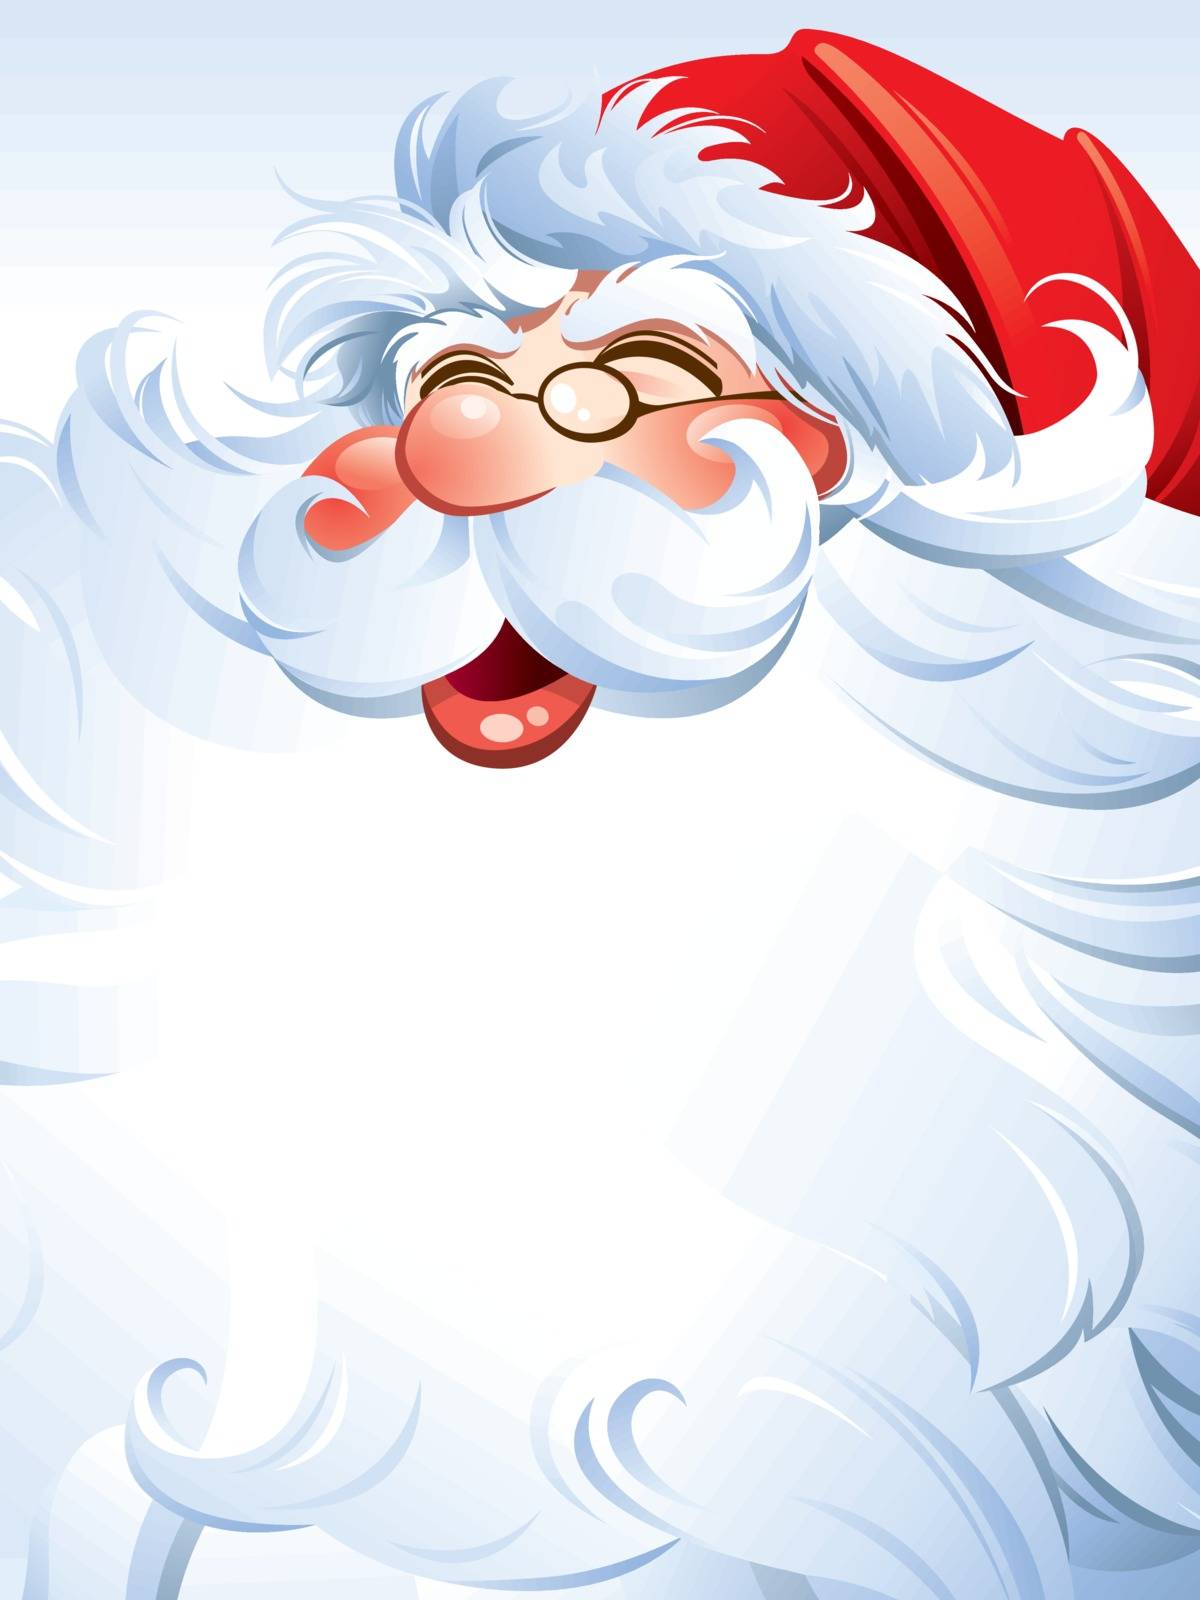 Ho ho ho! Merry Christmas! Santa Claus portrait with copy space